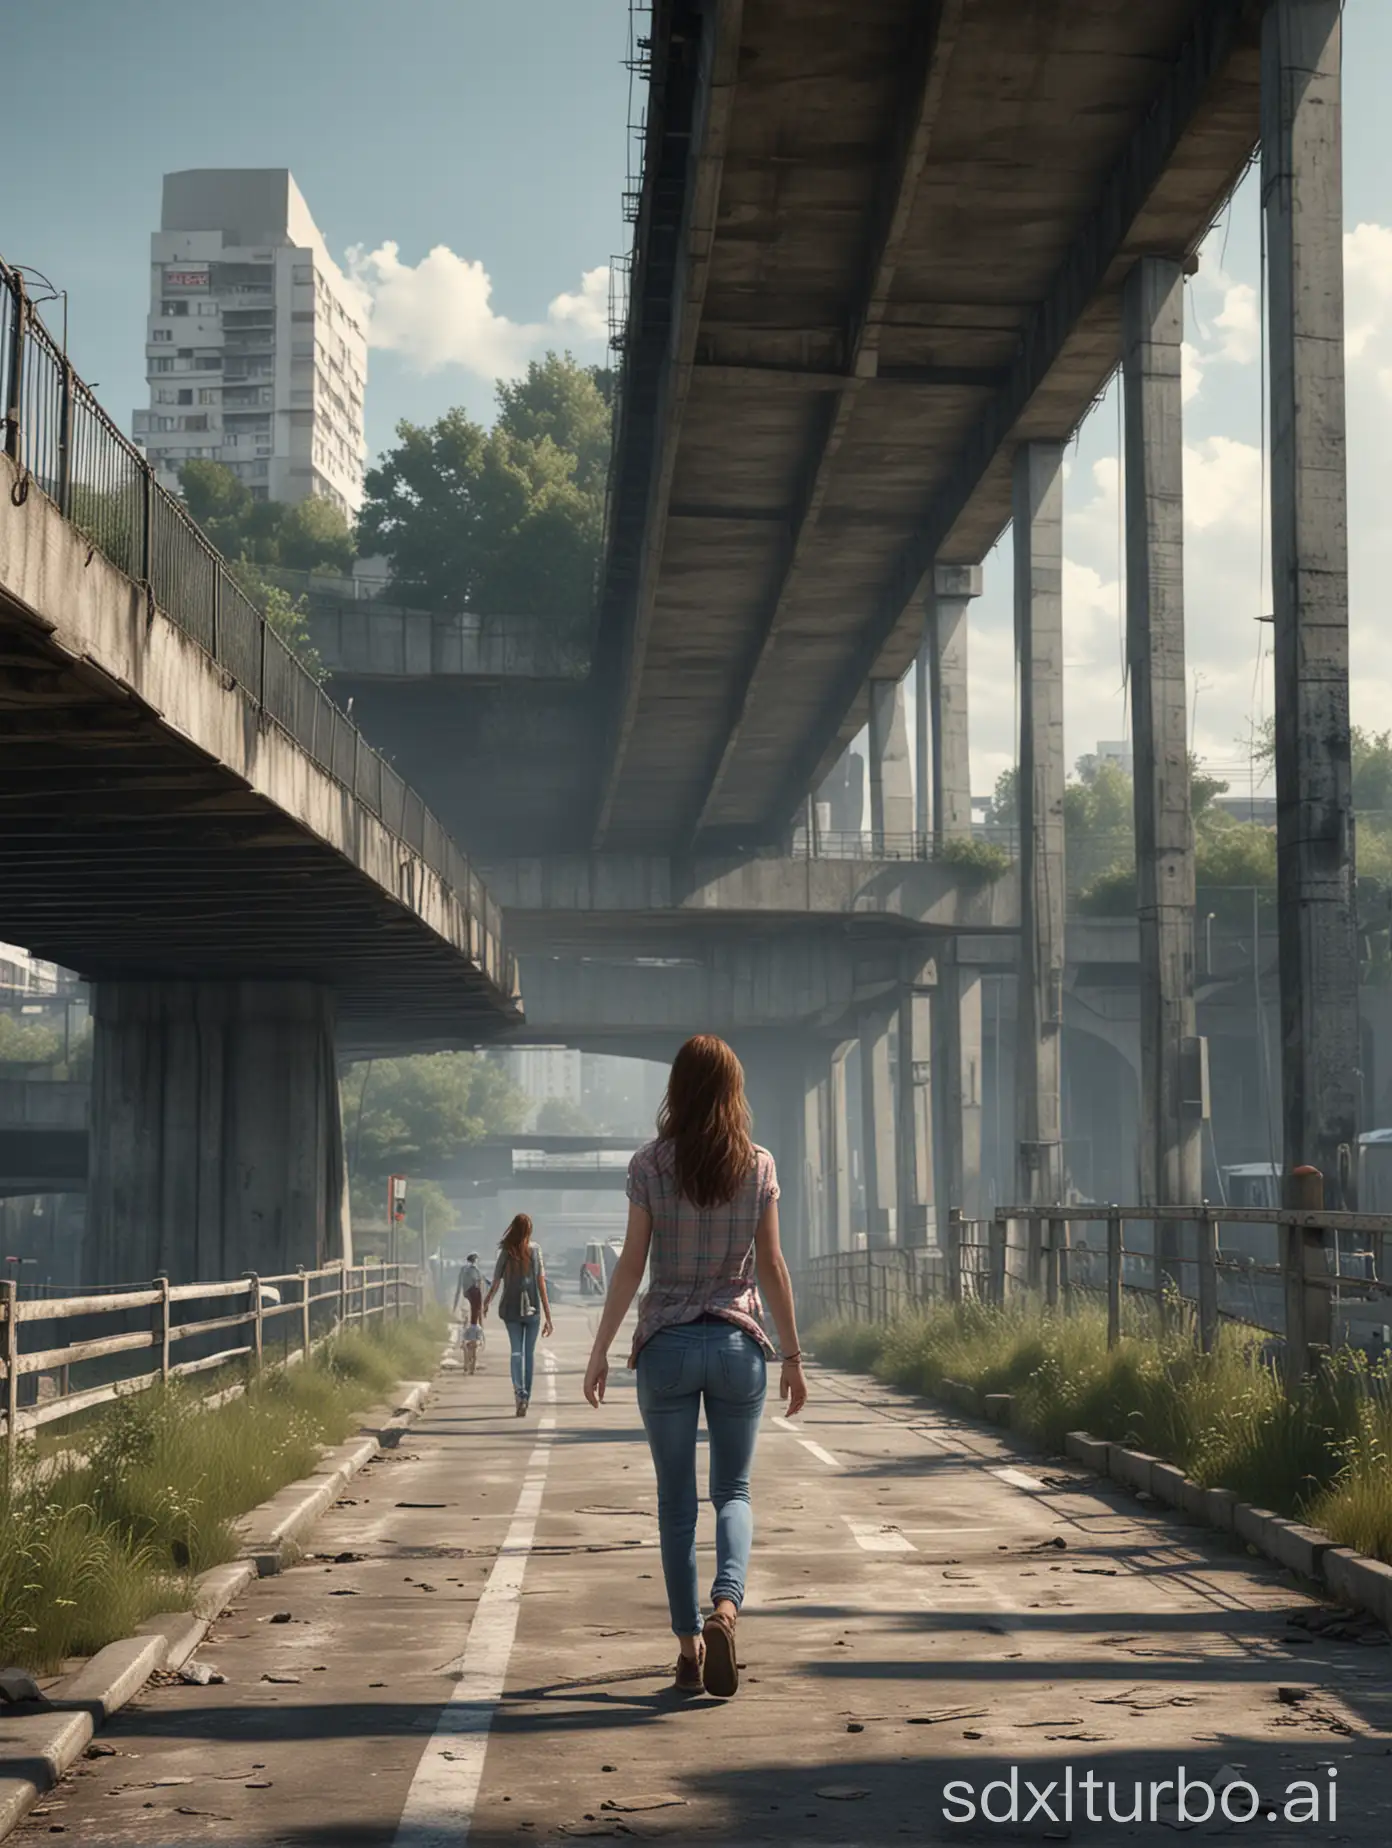 Urban-Stroll-Girl-Walking-with-Companion-Beneath-Overhead-Bridges